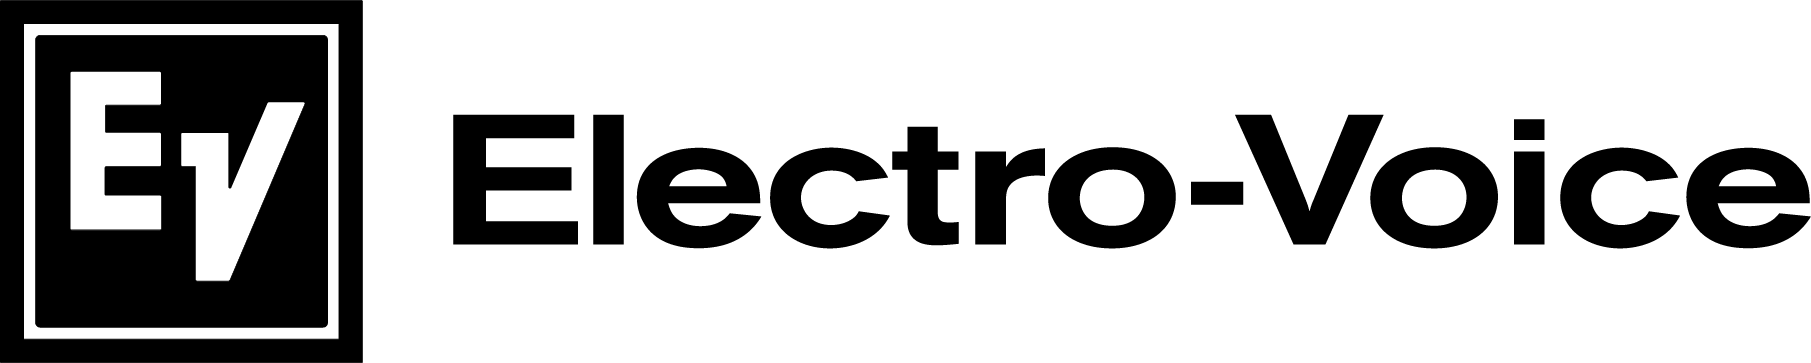 Electro-Voice Logo